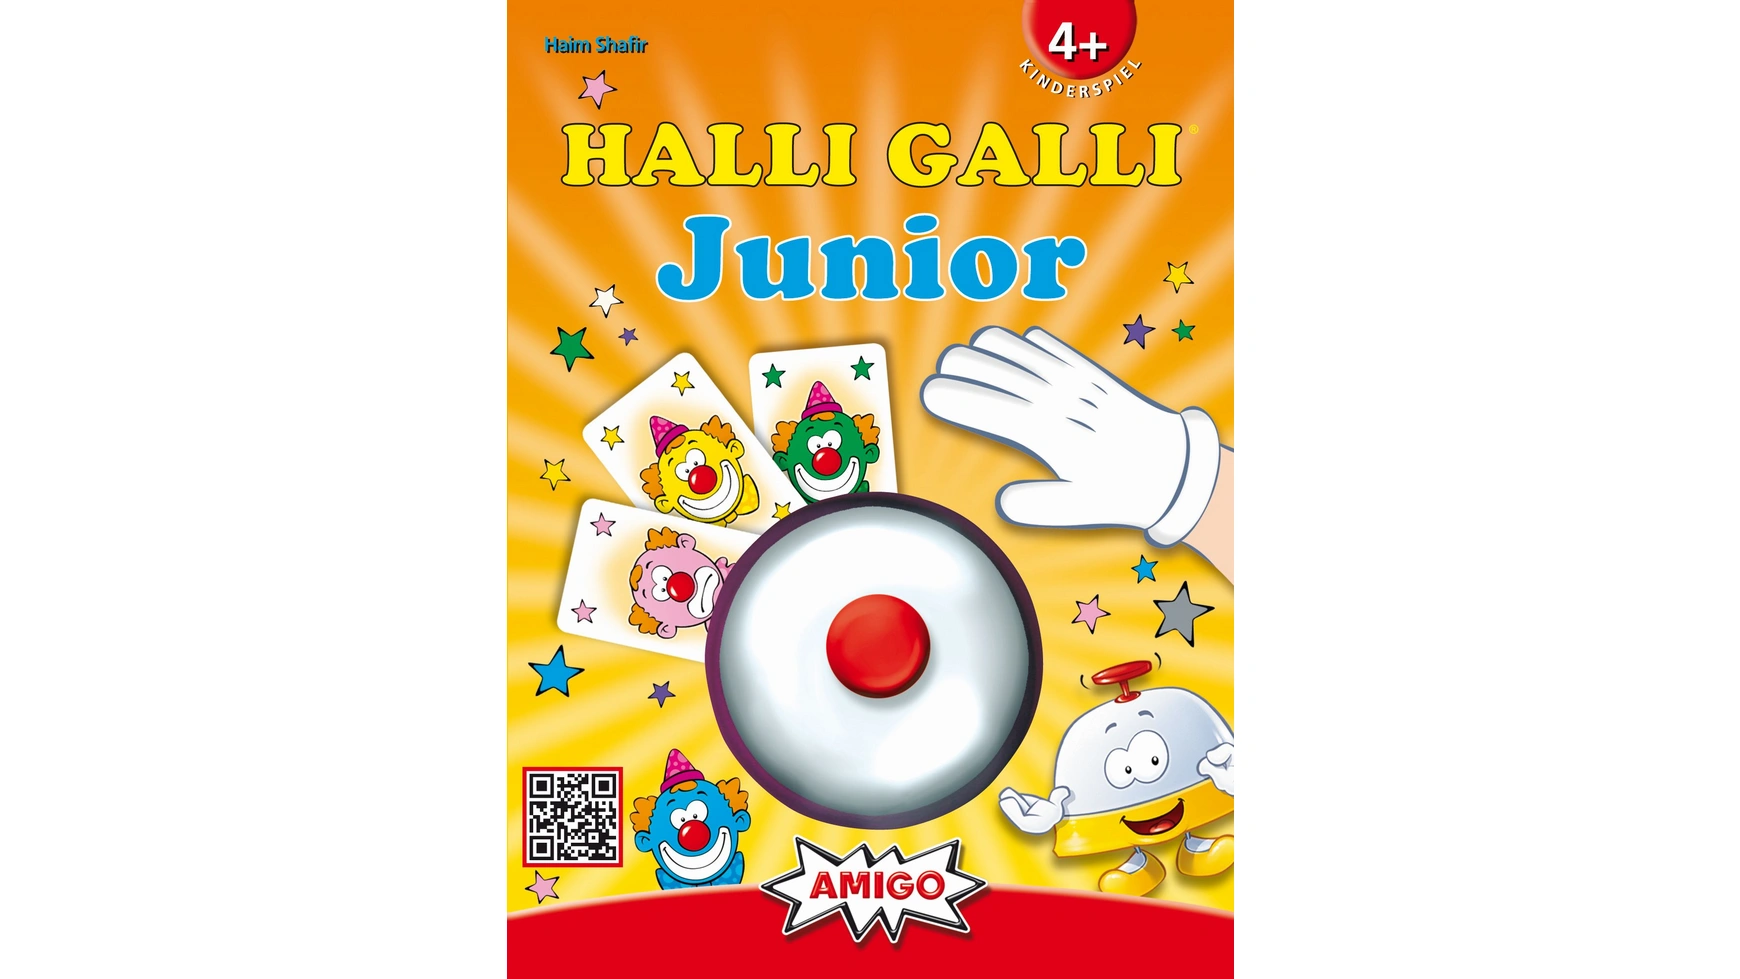 Игры Amigo Халли Галли Джуниор 2 type halli galli board game 2 6 players family fruity extreme version with metal bell speed action game